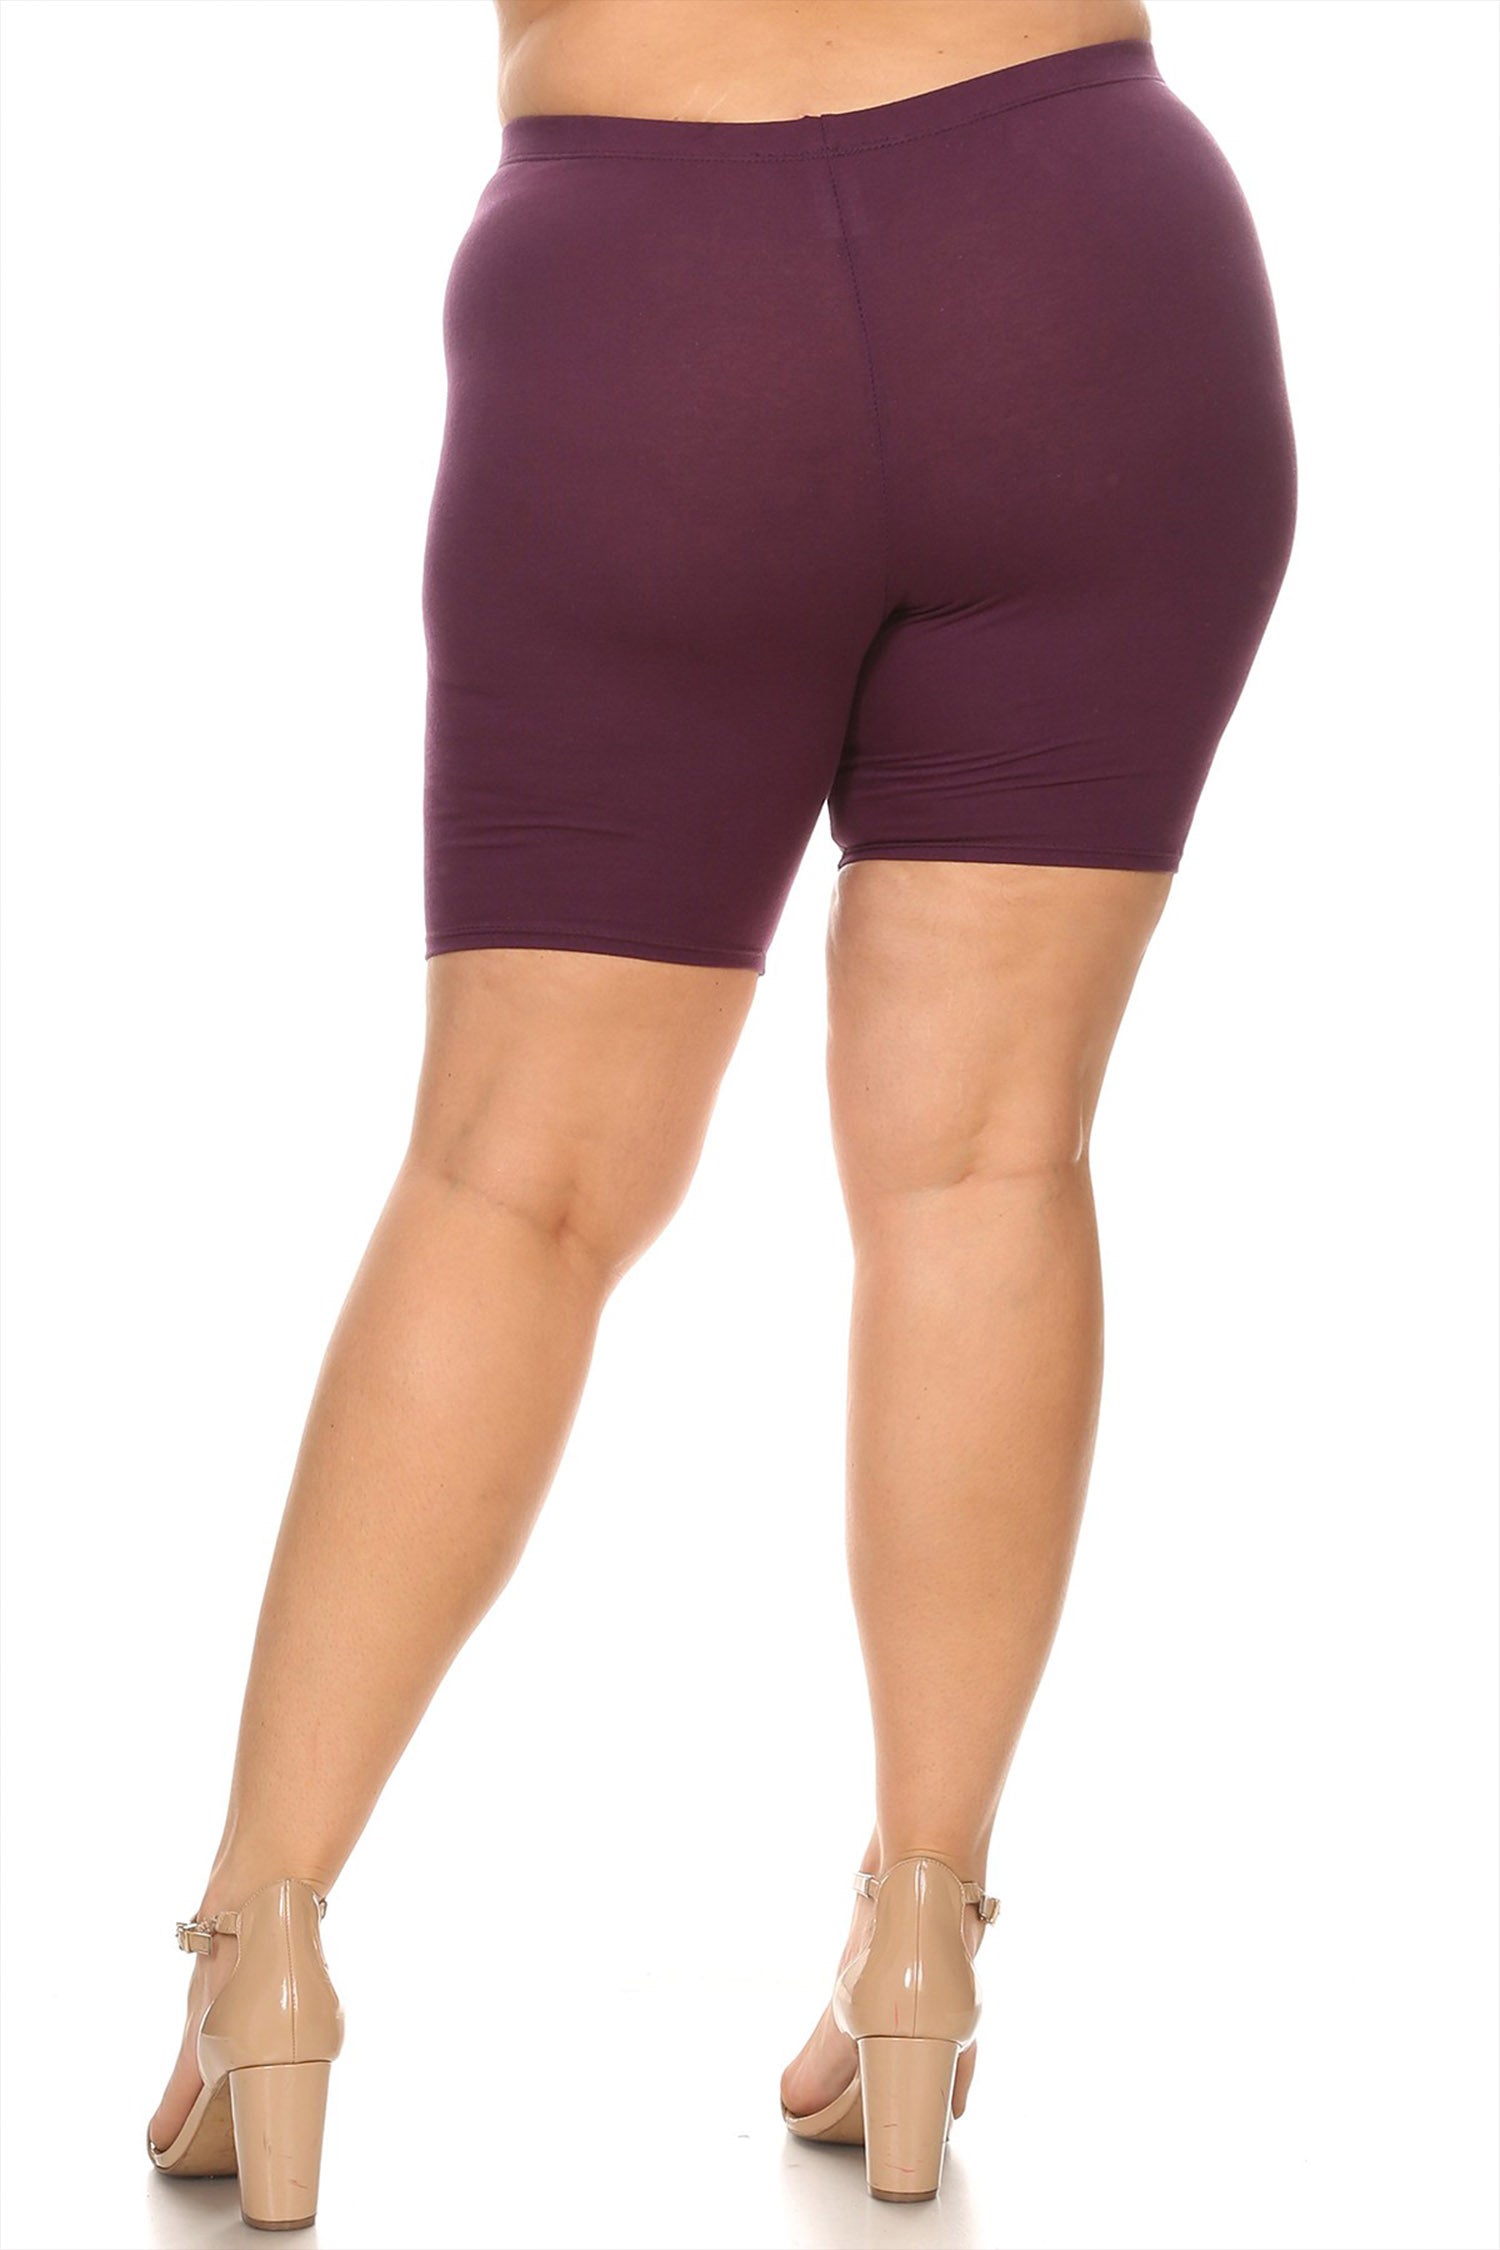 Women's Plus Size Casual Basic Solid Biker Shorts Pants - FashionJOA